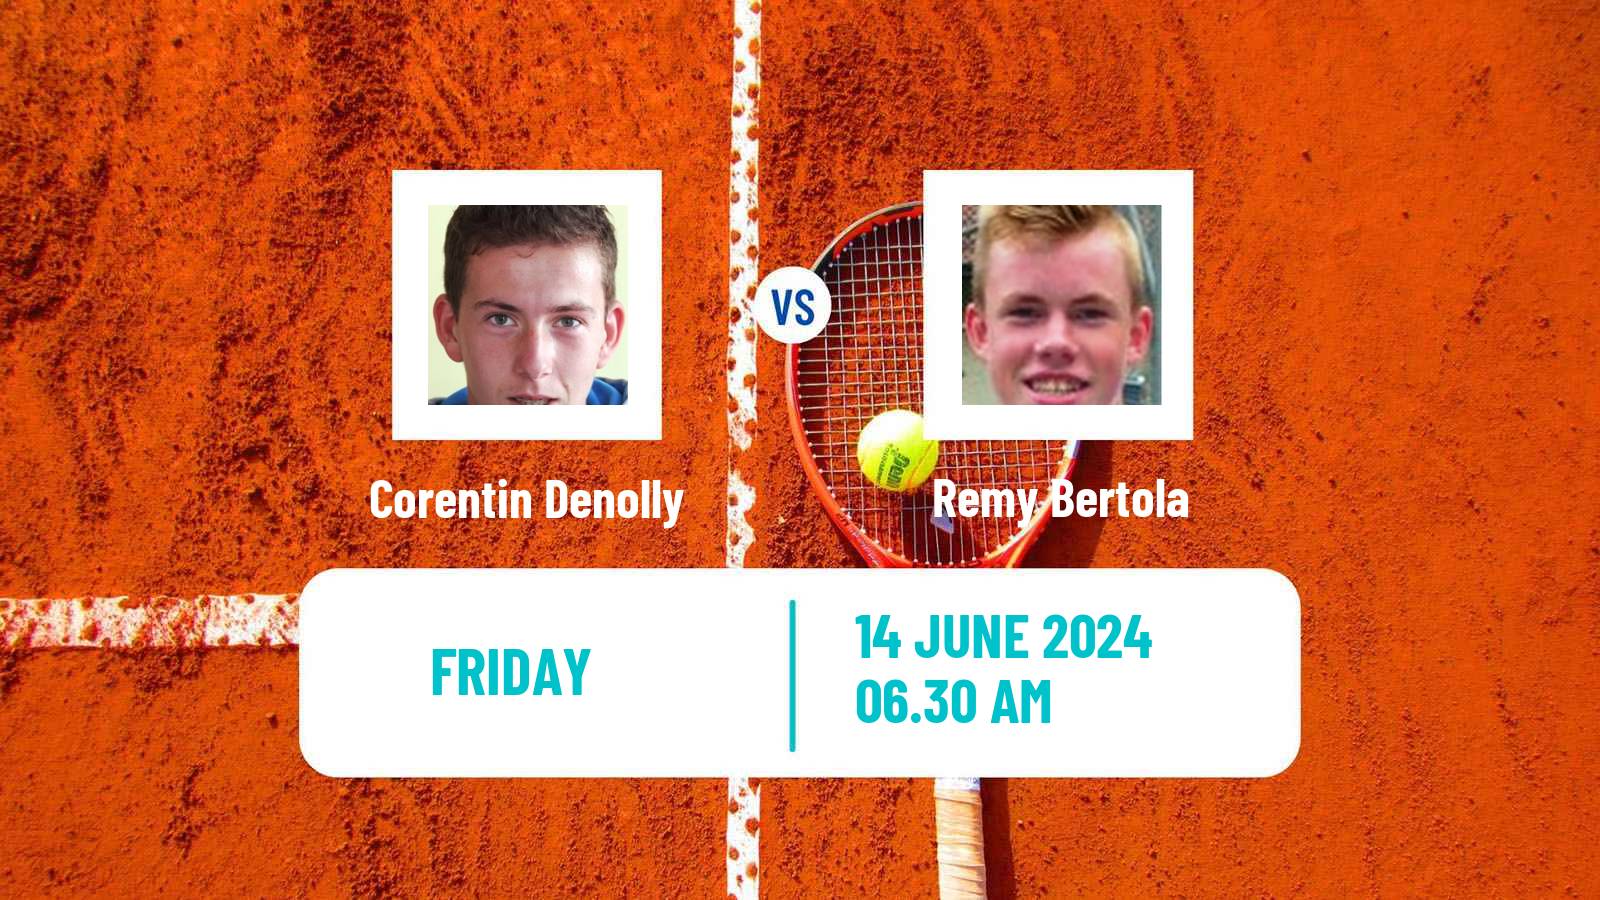 Tennis ITF M25 Villeneuve Loubet H Men Corentin Denolly - Remy Bertola